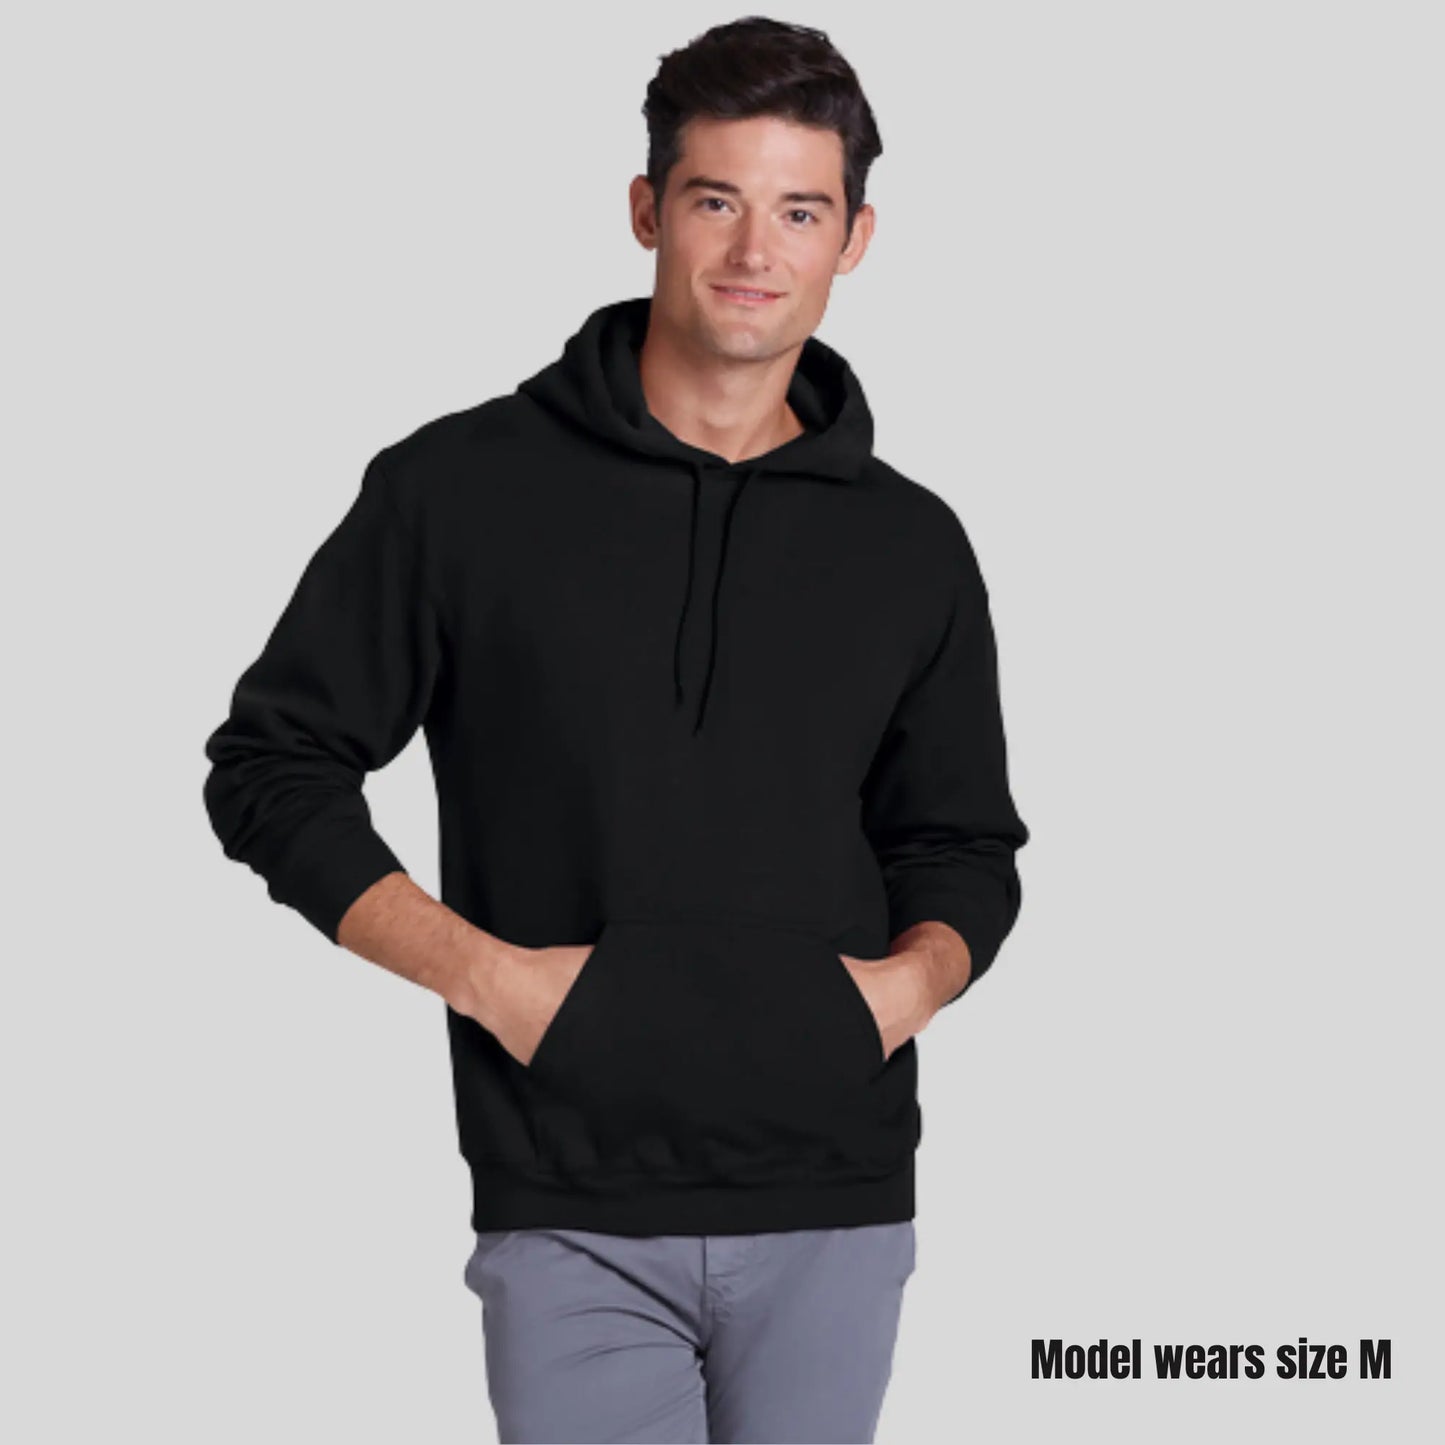 Chill Take It Easy Hoodie - Uplifting Positive Sweatshirt